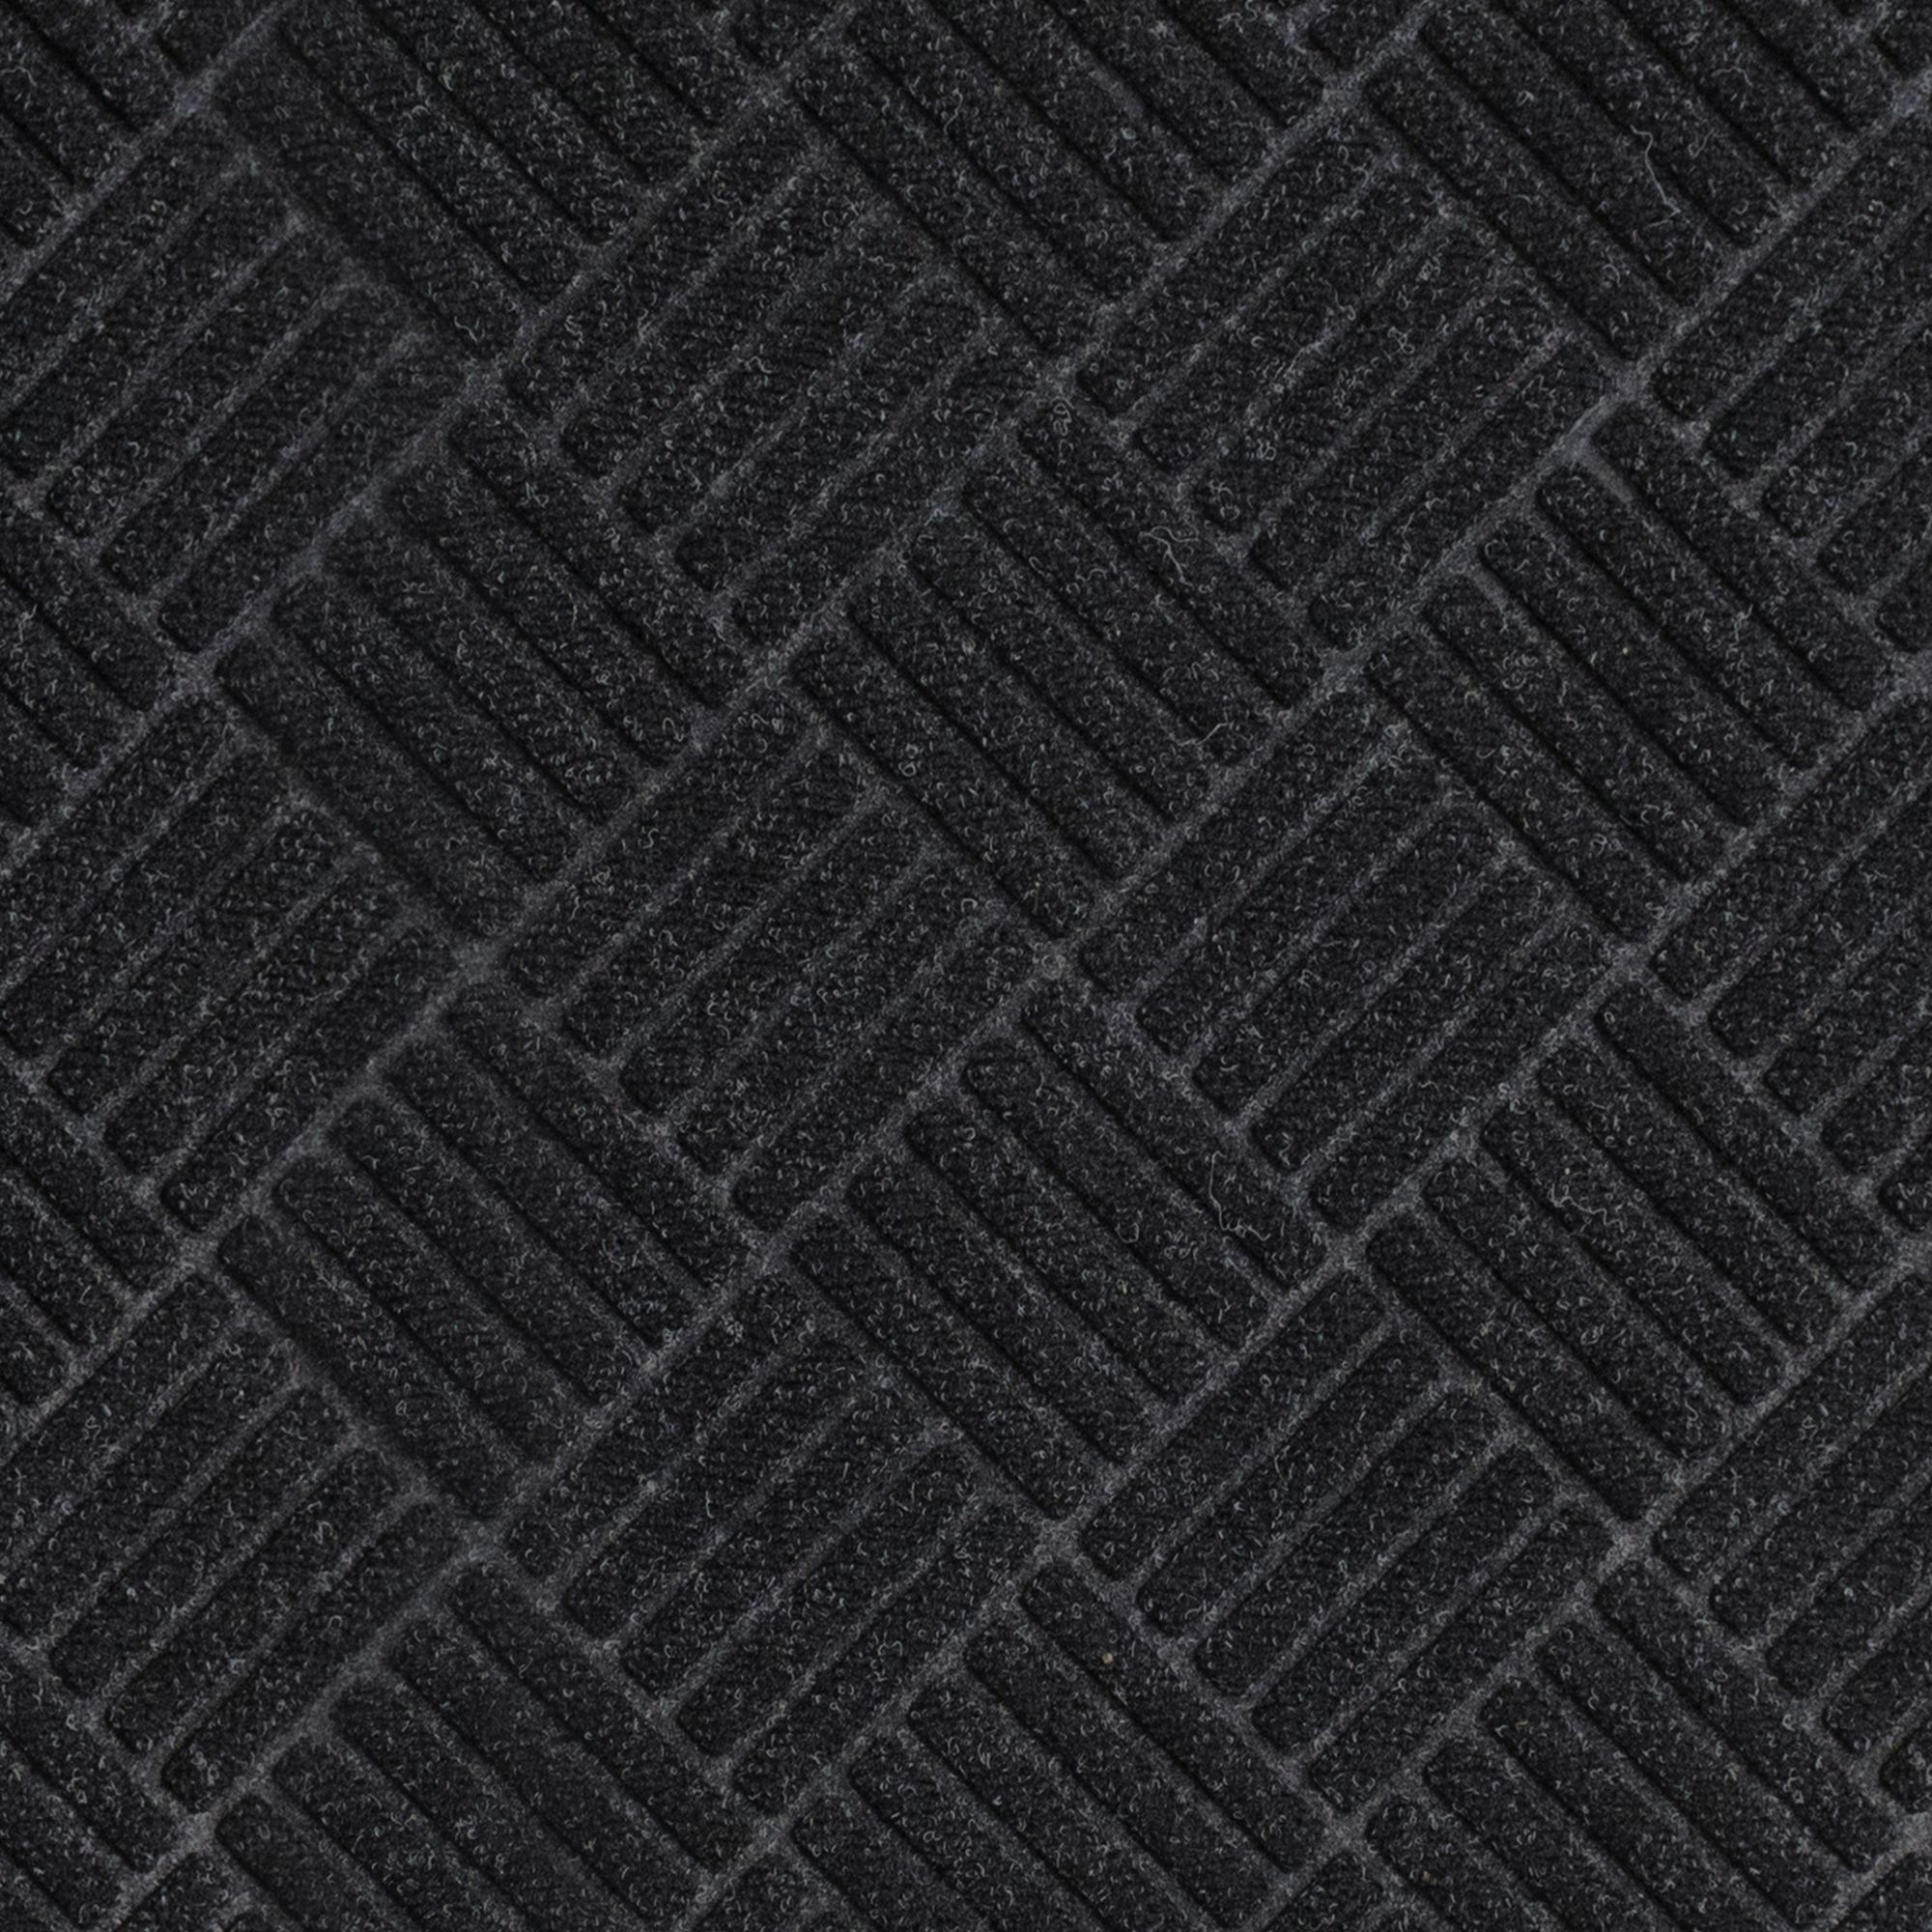 Genuine Joe Clean Step Outdoor Scraper Mat, 3 x 5 ft, Rubber, Black